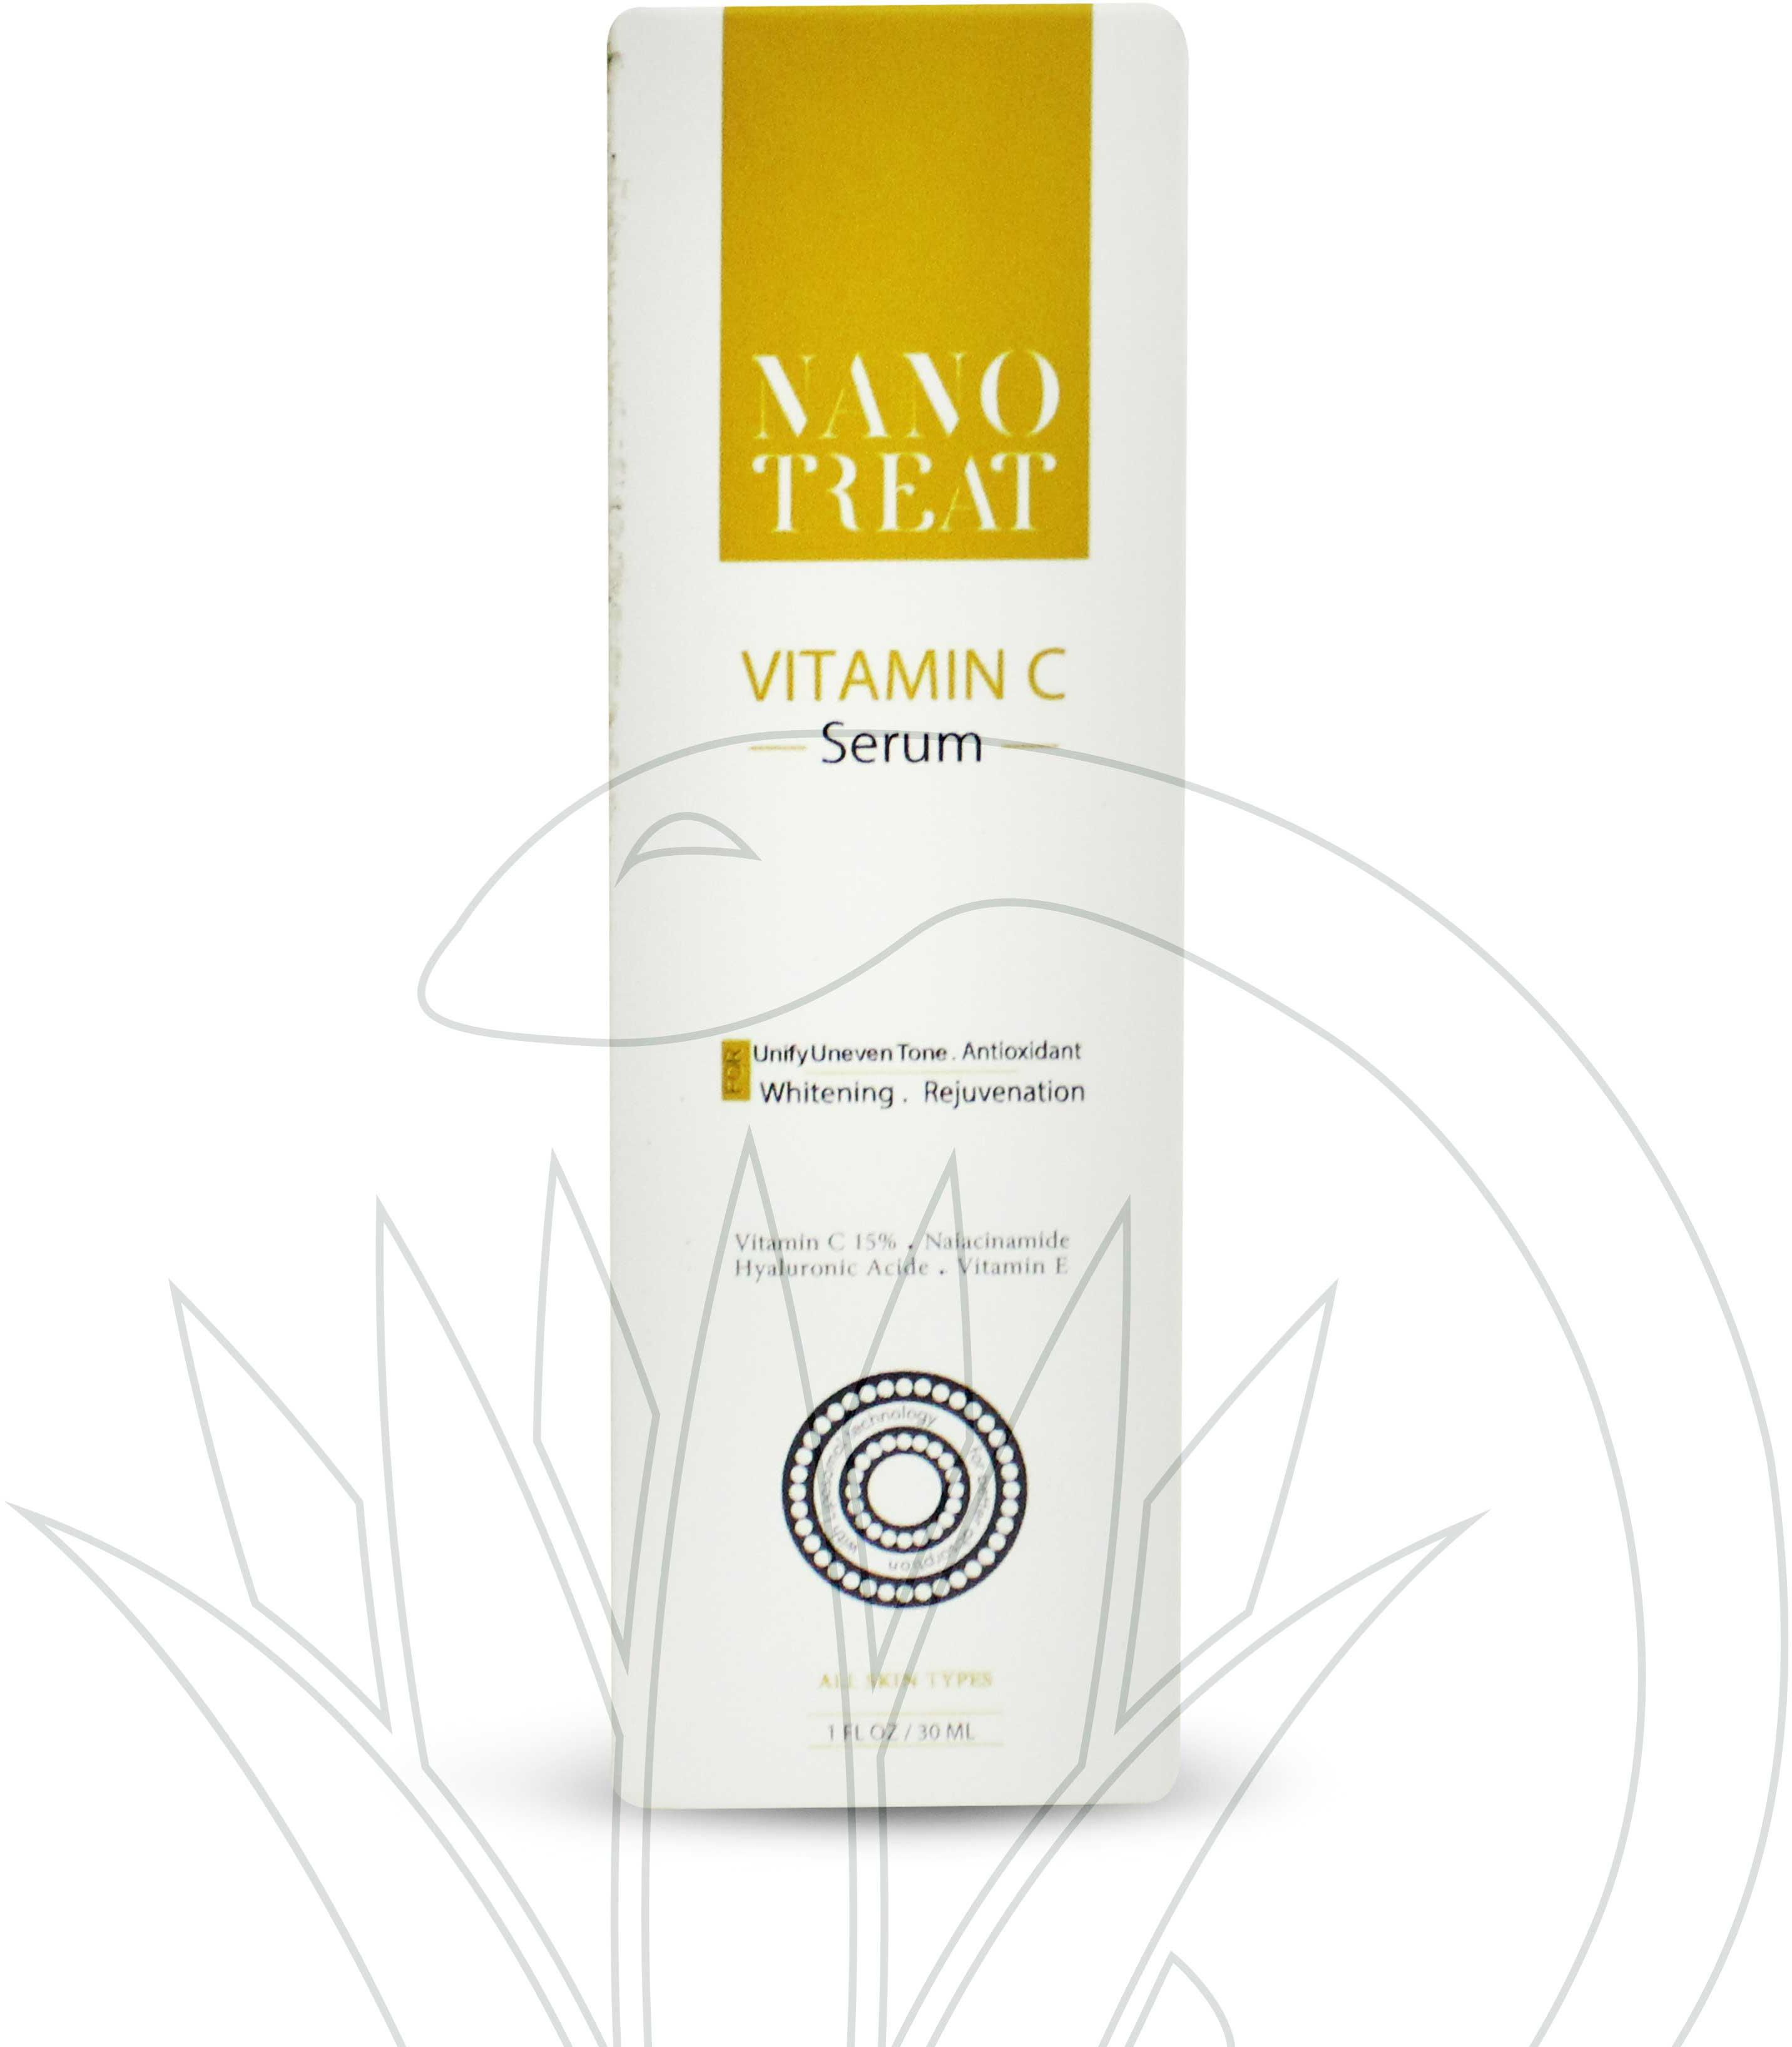 Nano Treat Vitamin C Serum 15% - 30Ml